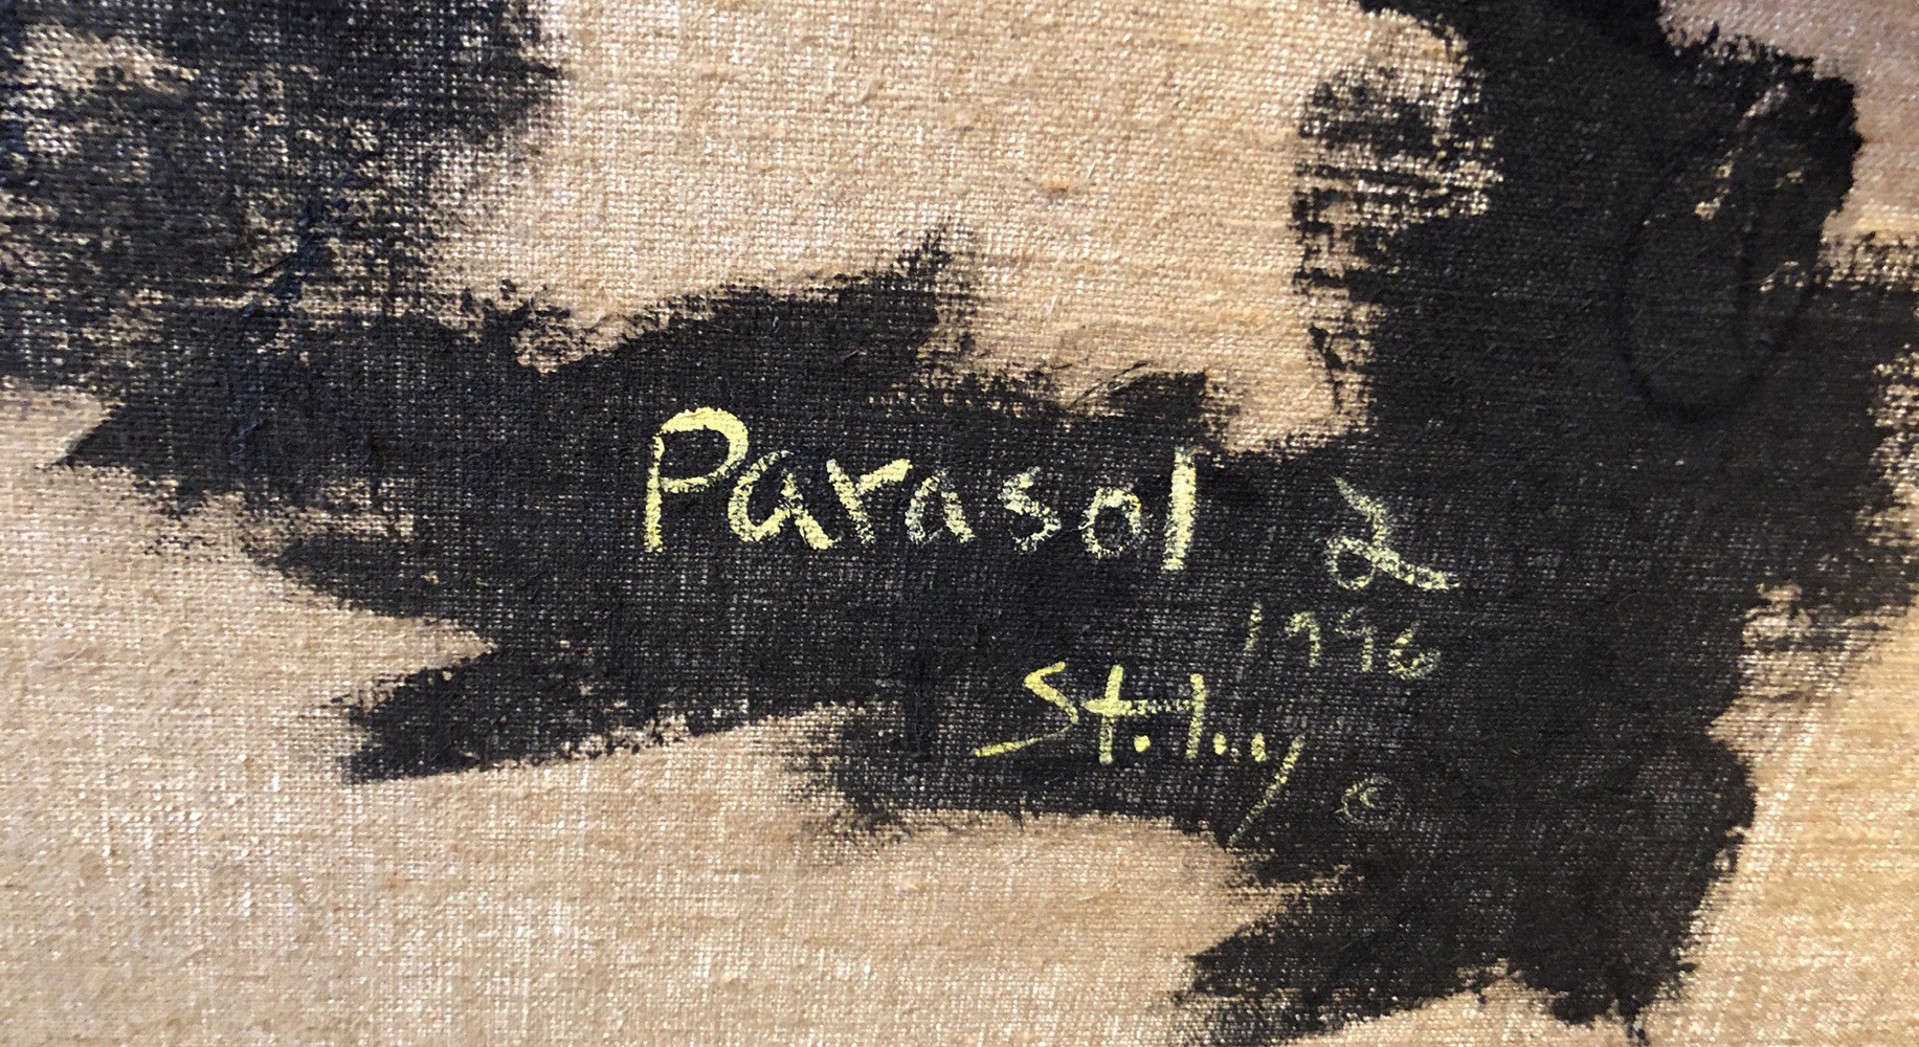 Parasol 2 by Earl Staley